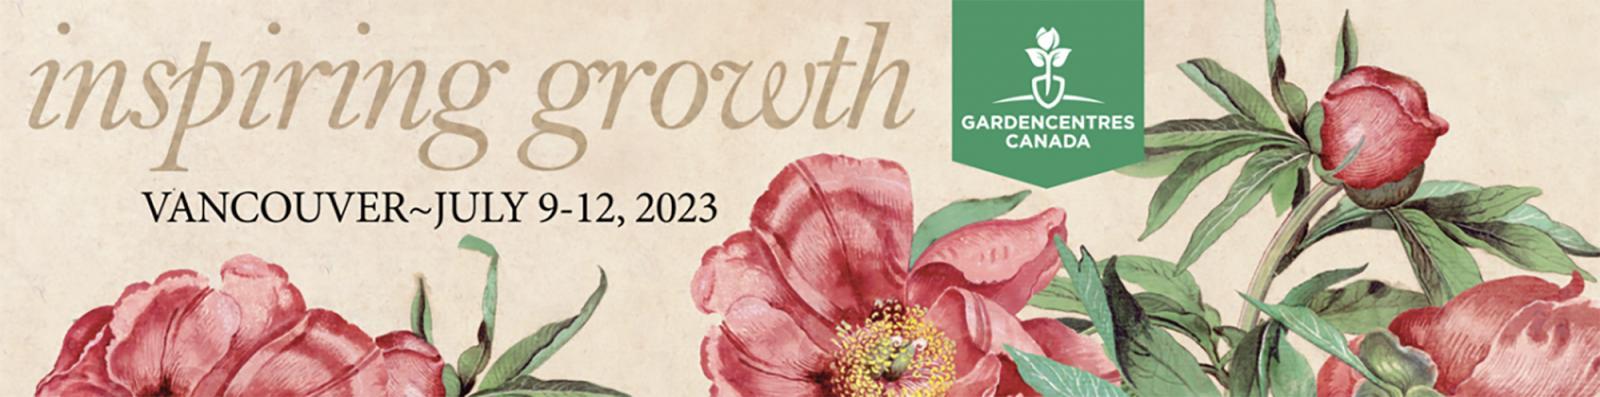 Garden Centres Canada Summit 2023 - Vancouver